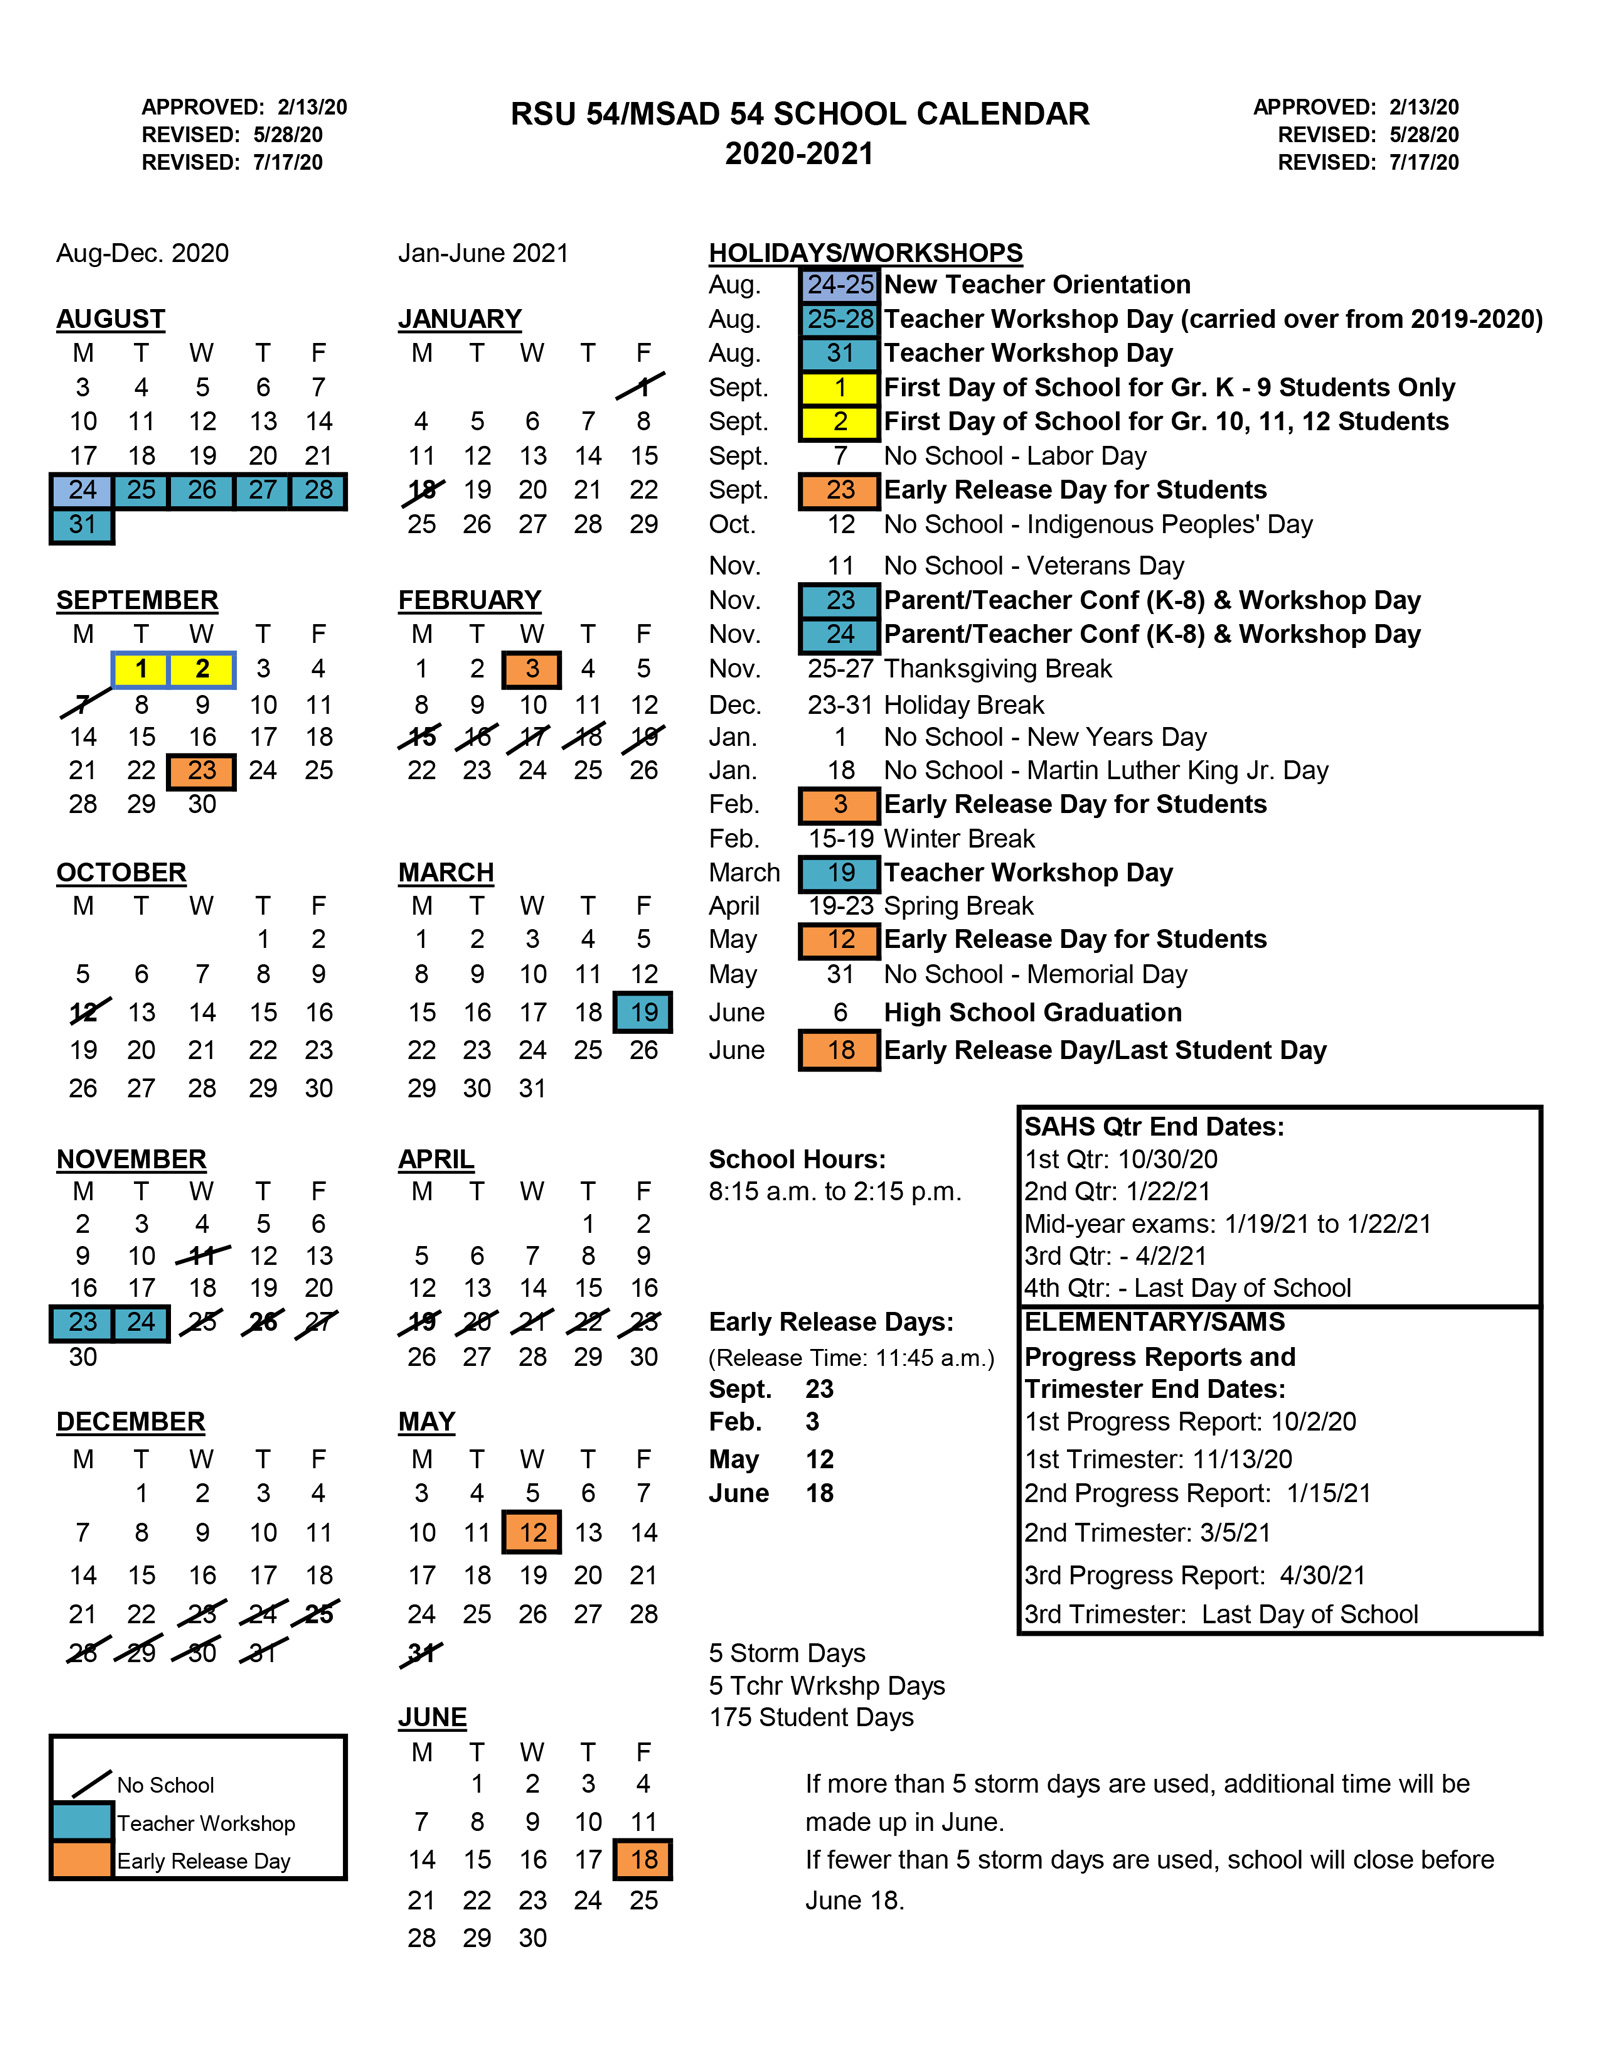 Calendar | Rsumsad 54 intended for Richmond County Ga School Calendar